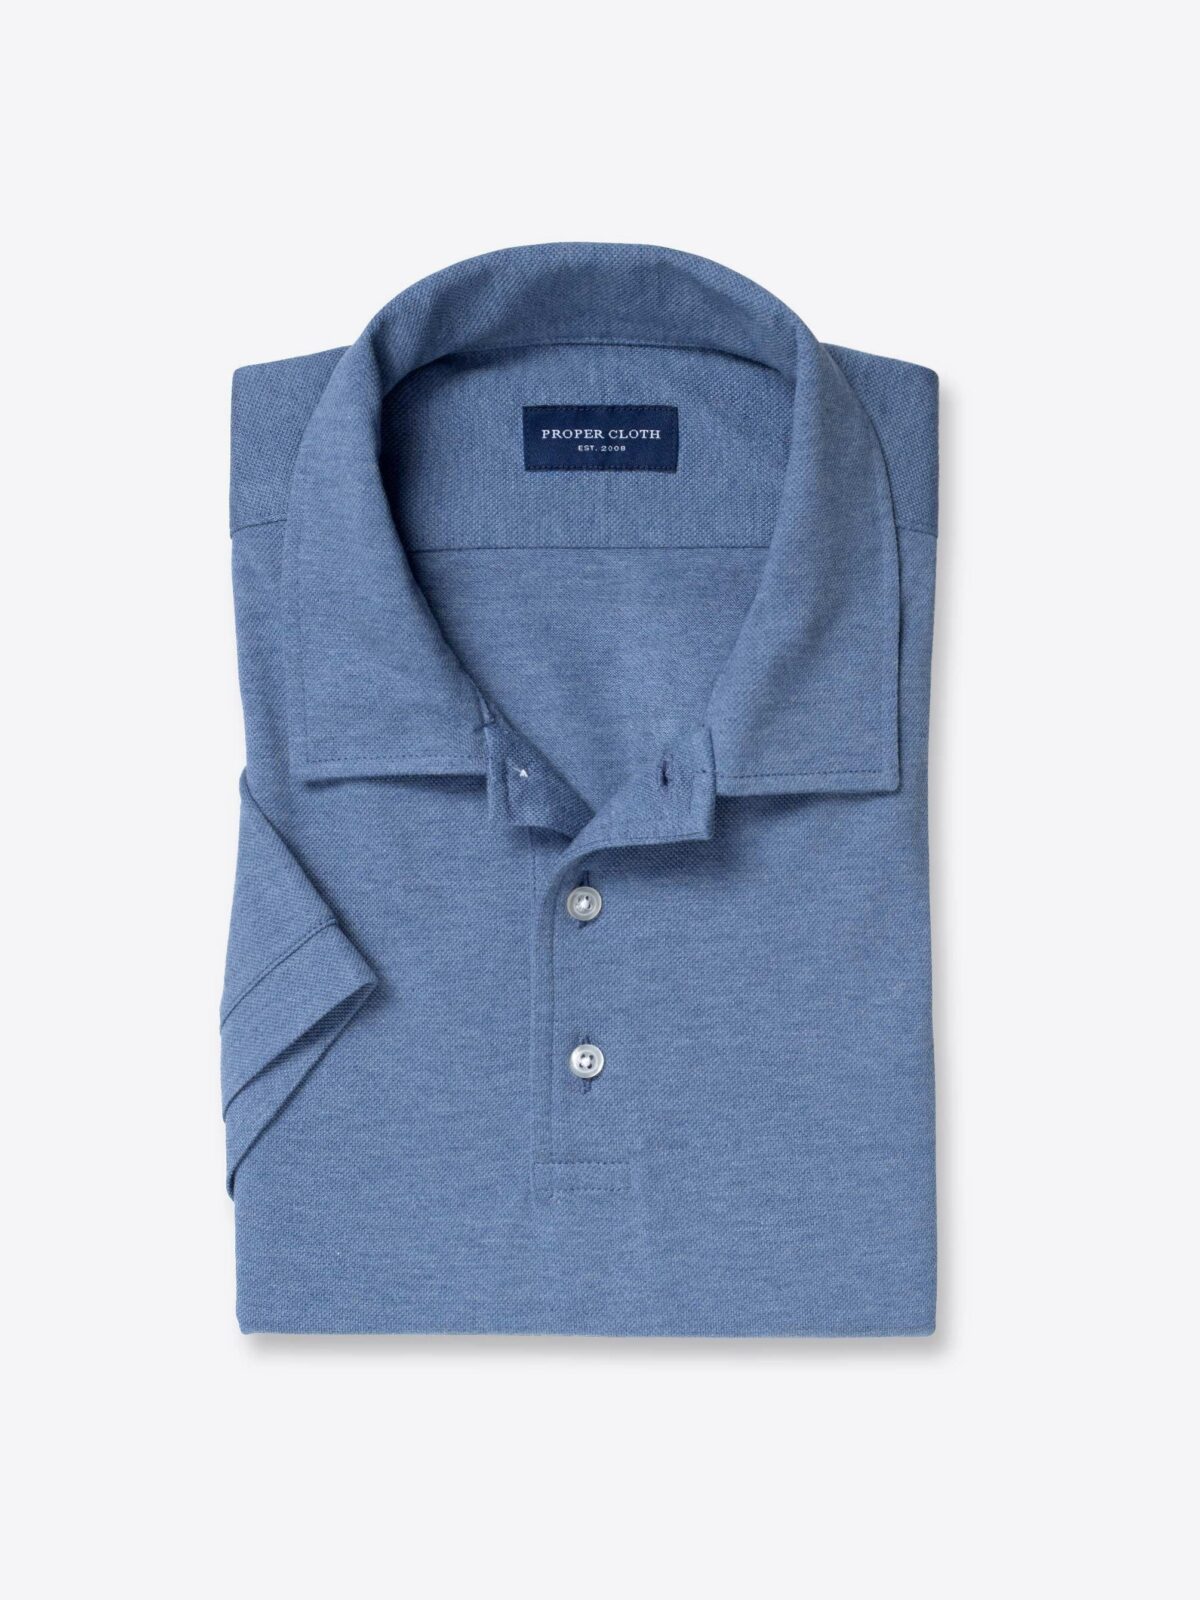 Geometric G cotton piquet polo shirt in light blue